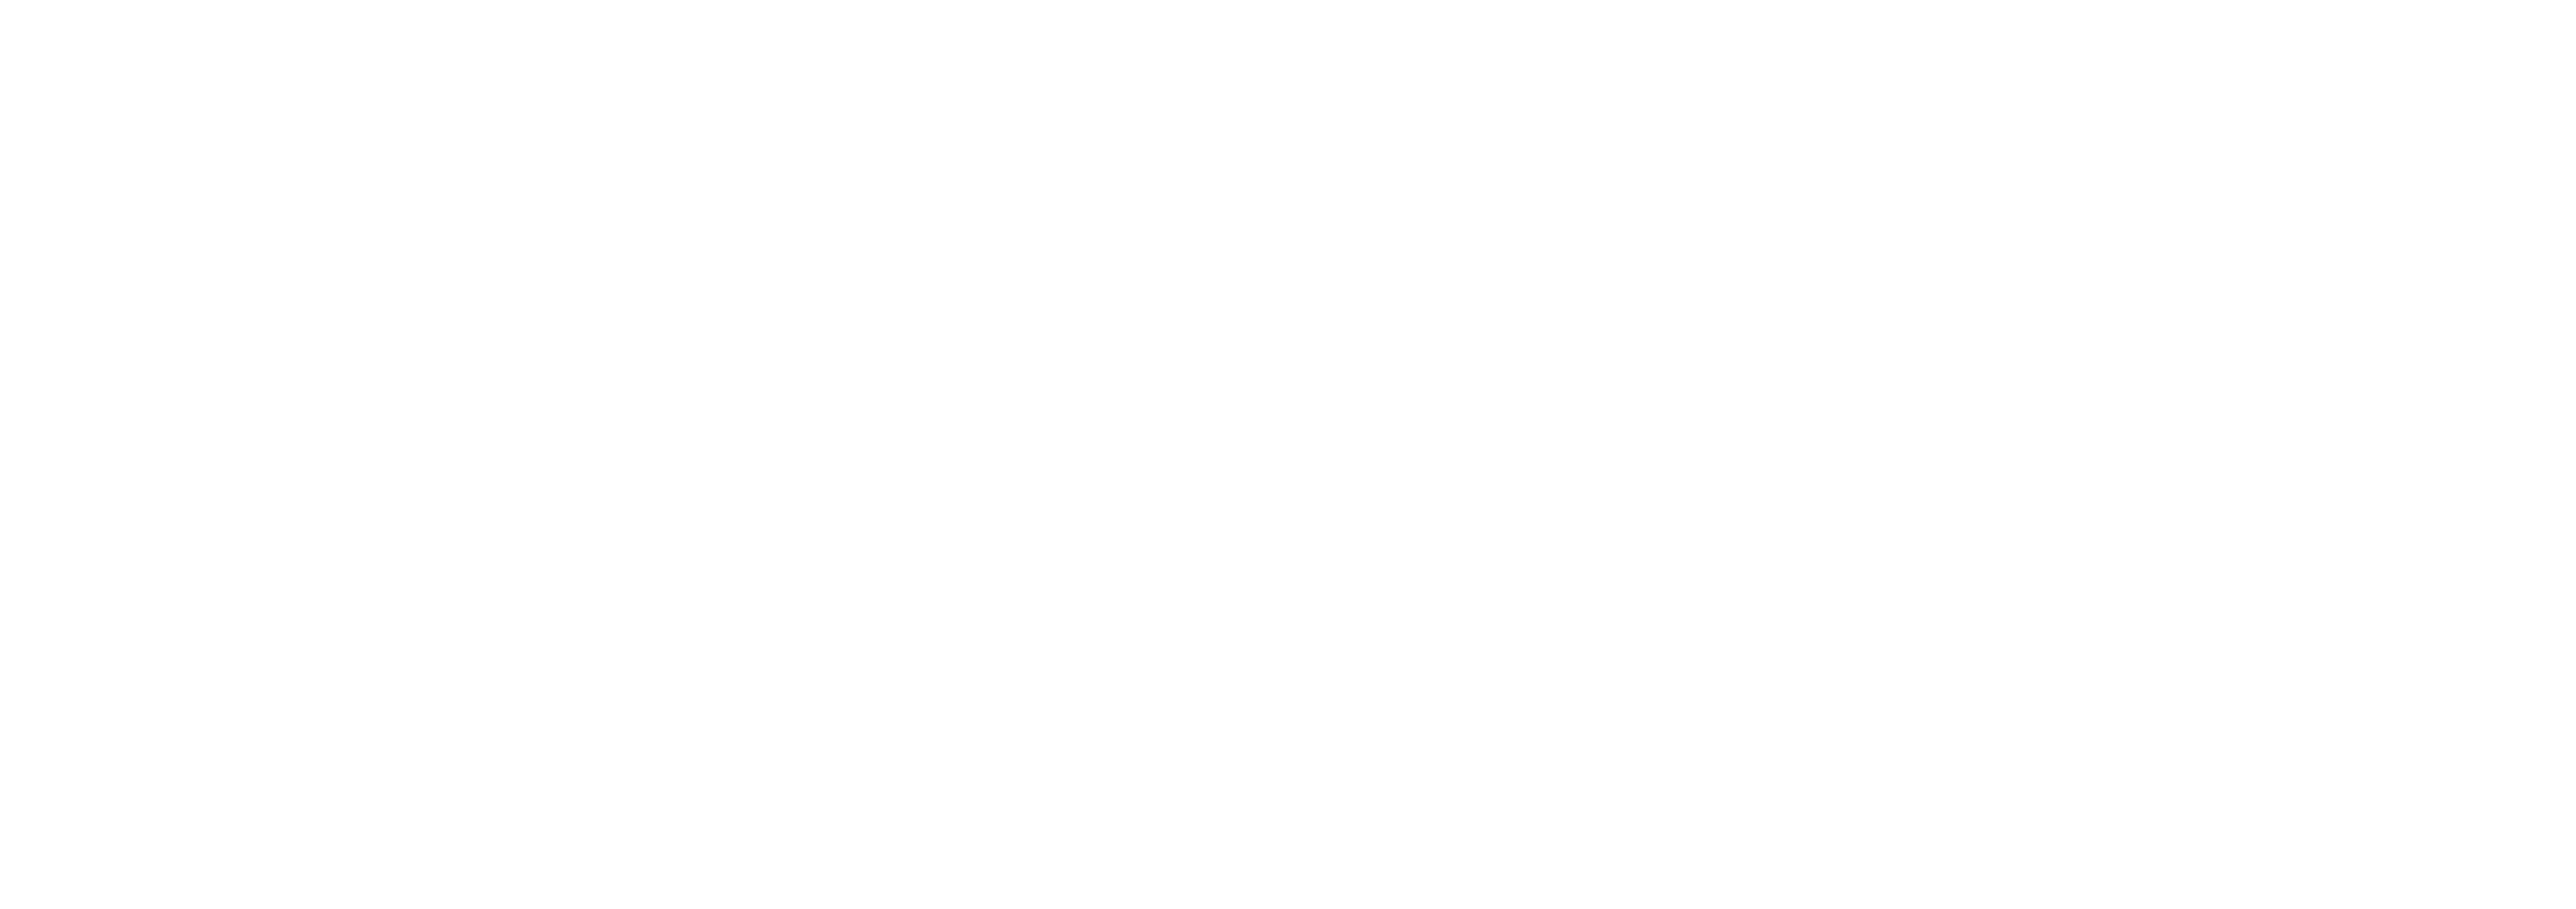 Queen-Creek-white-word-logo